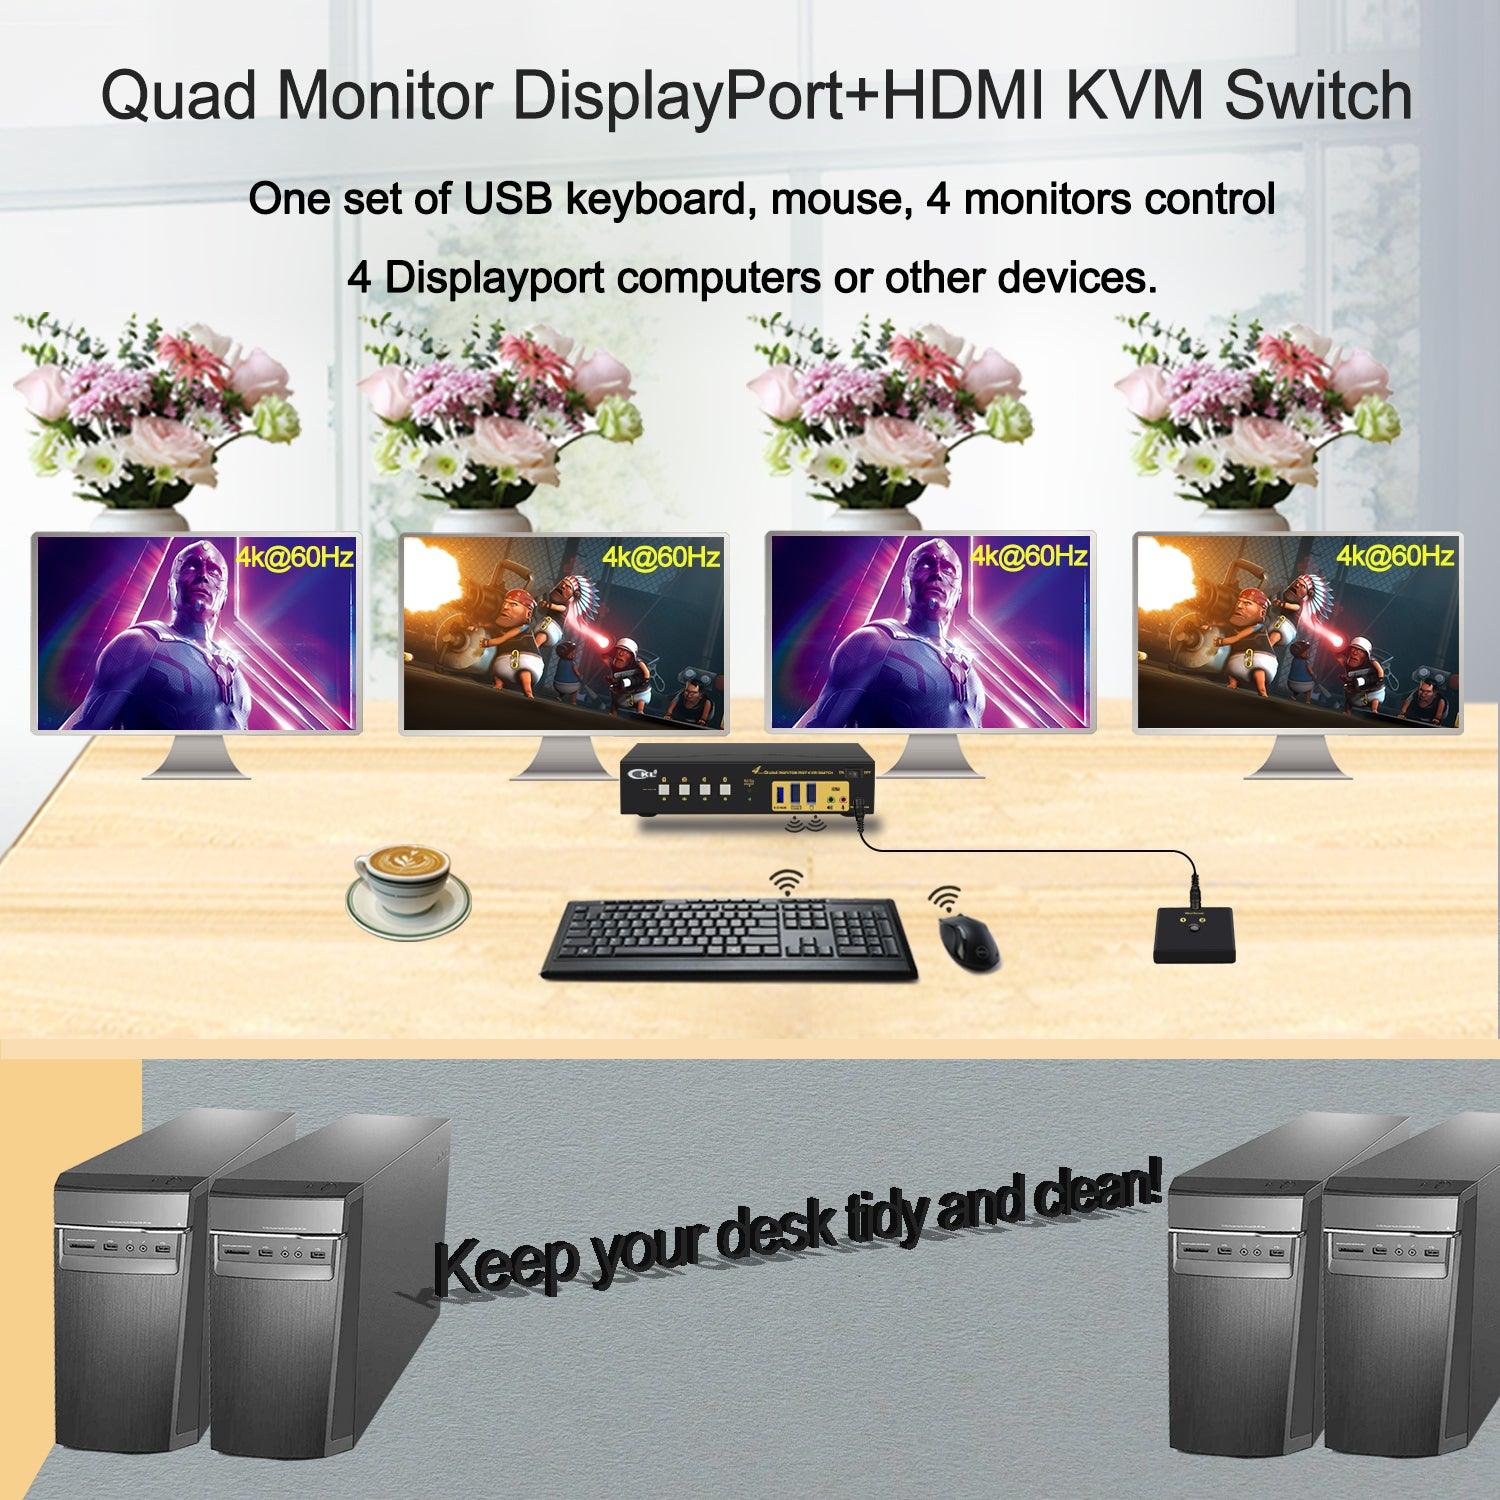 CKL DisplayPort 1.4 MST KVM Switch Quad Monitor 4 Port 4K 60Hz | DisplayPort + HDMI Output | 4 Computers 4 Monitors | Support USB 3.0, Audio, Mic (644DH-MST) - CKL KVM Switches